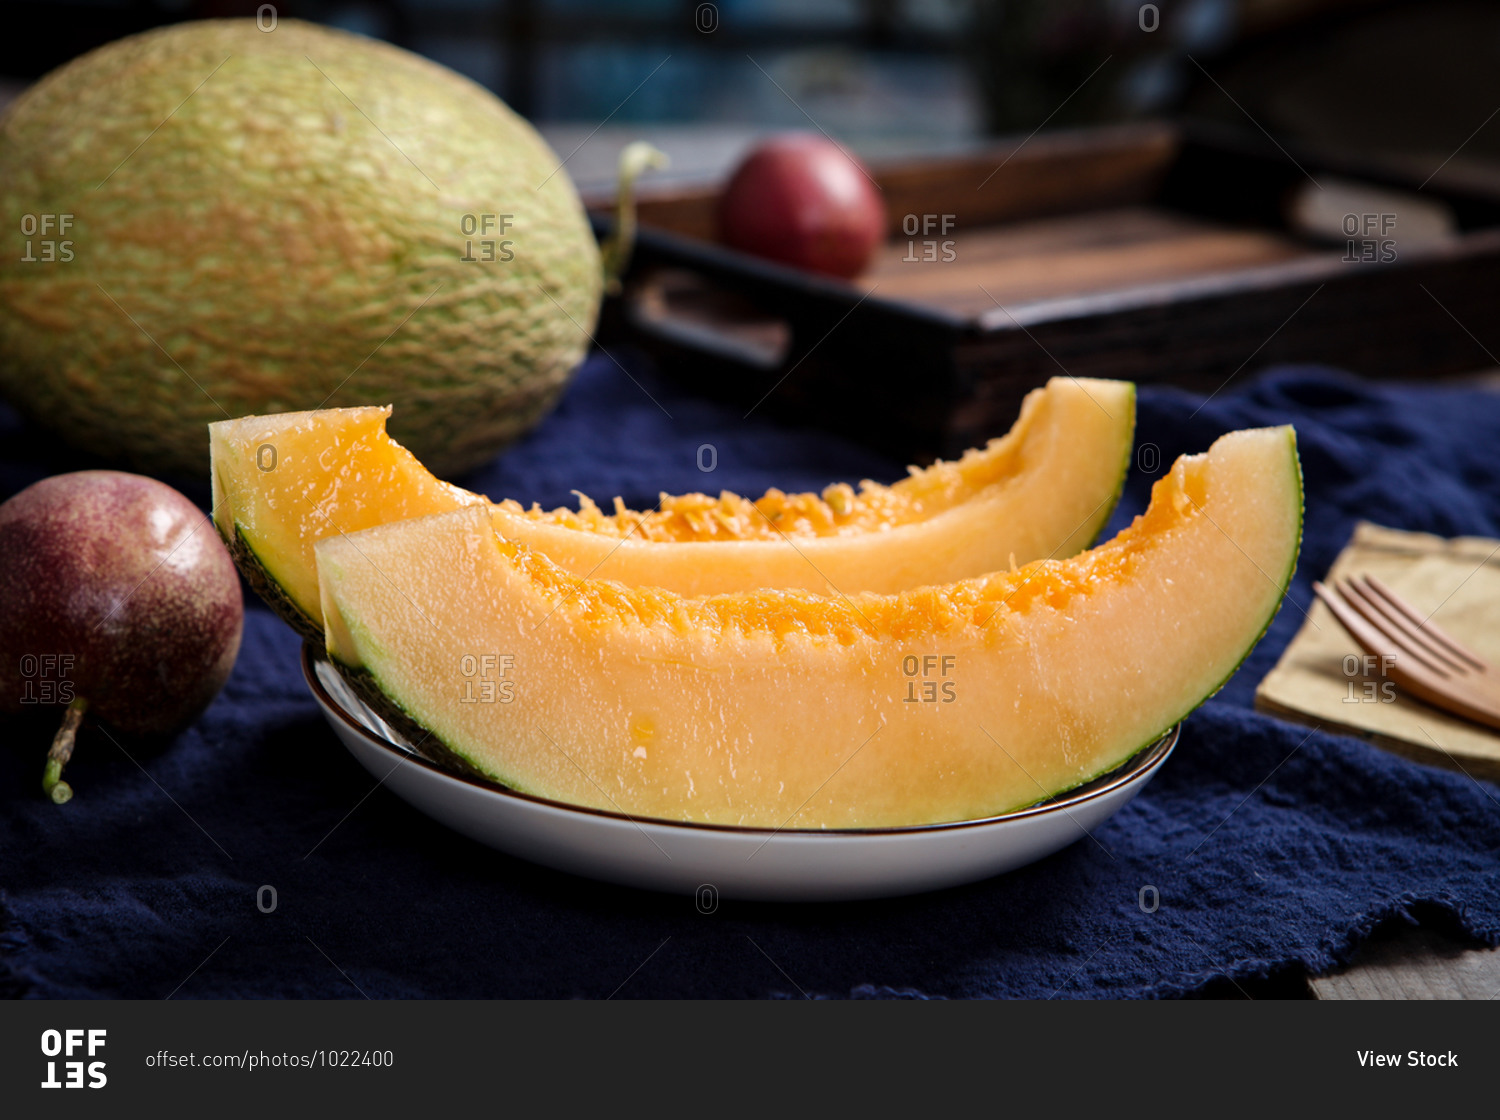 Hami melon set out on a plate